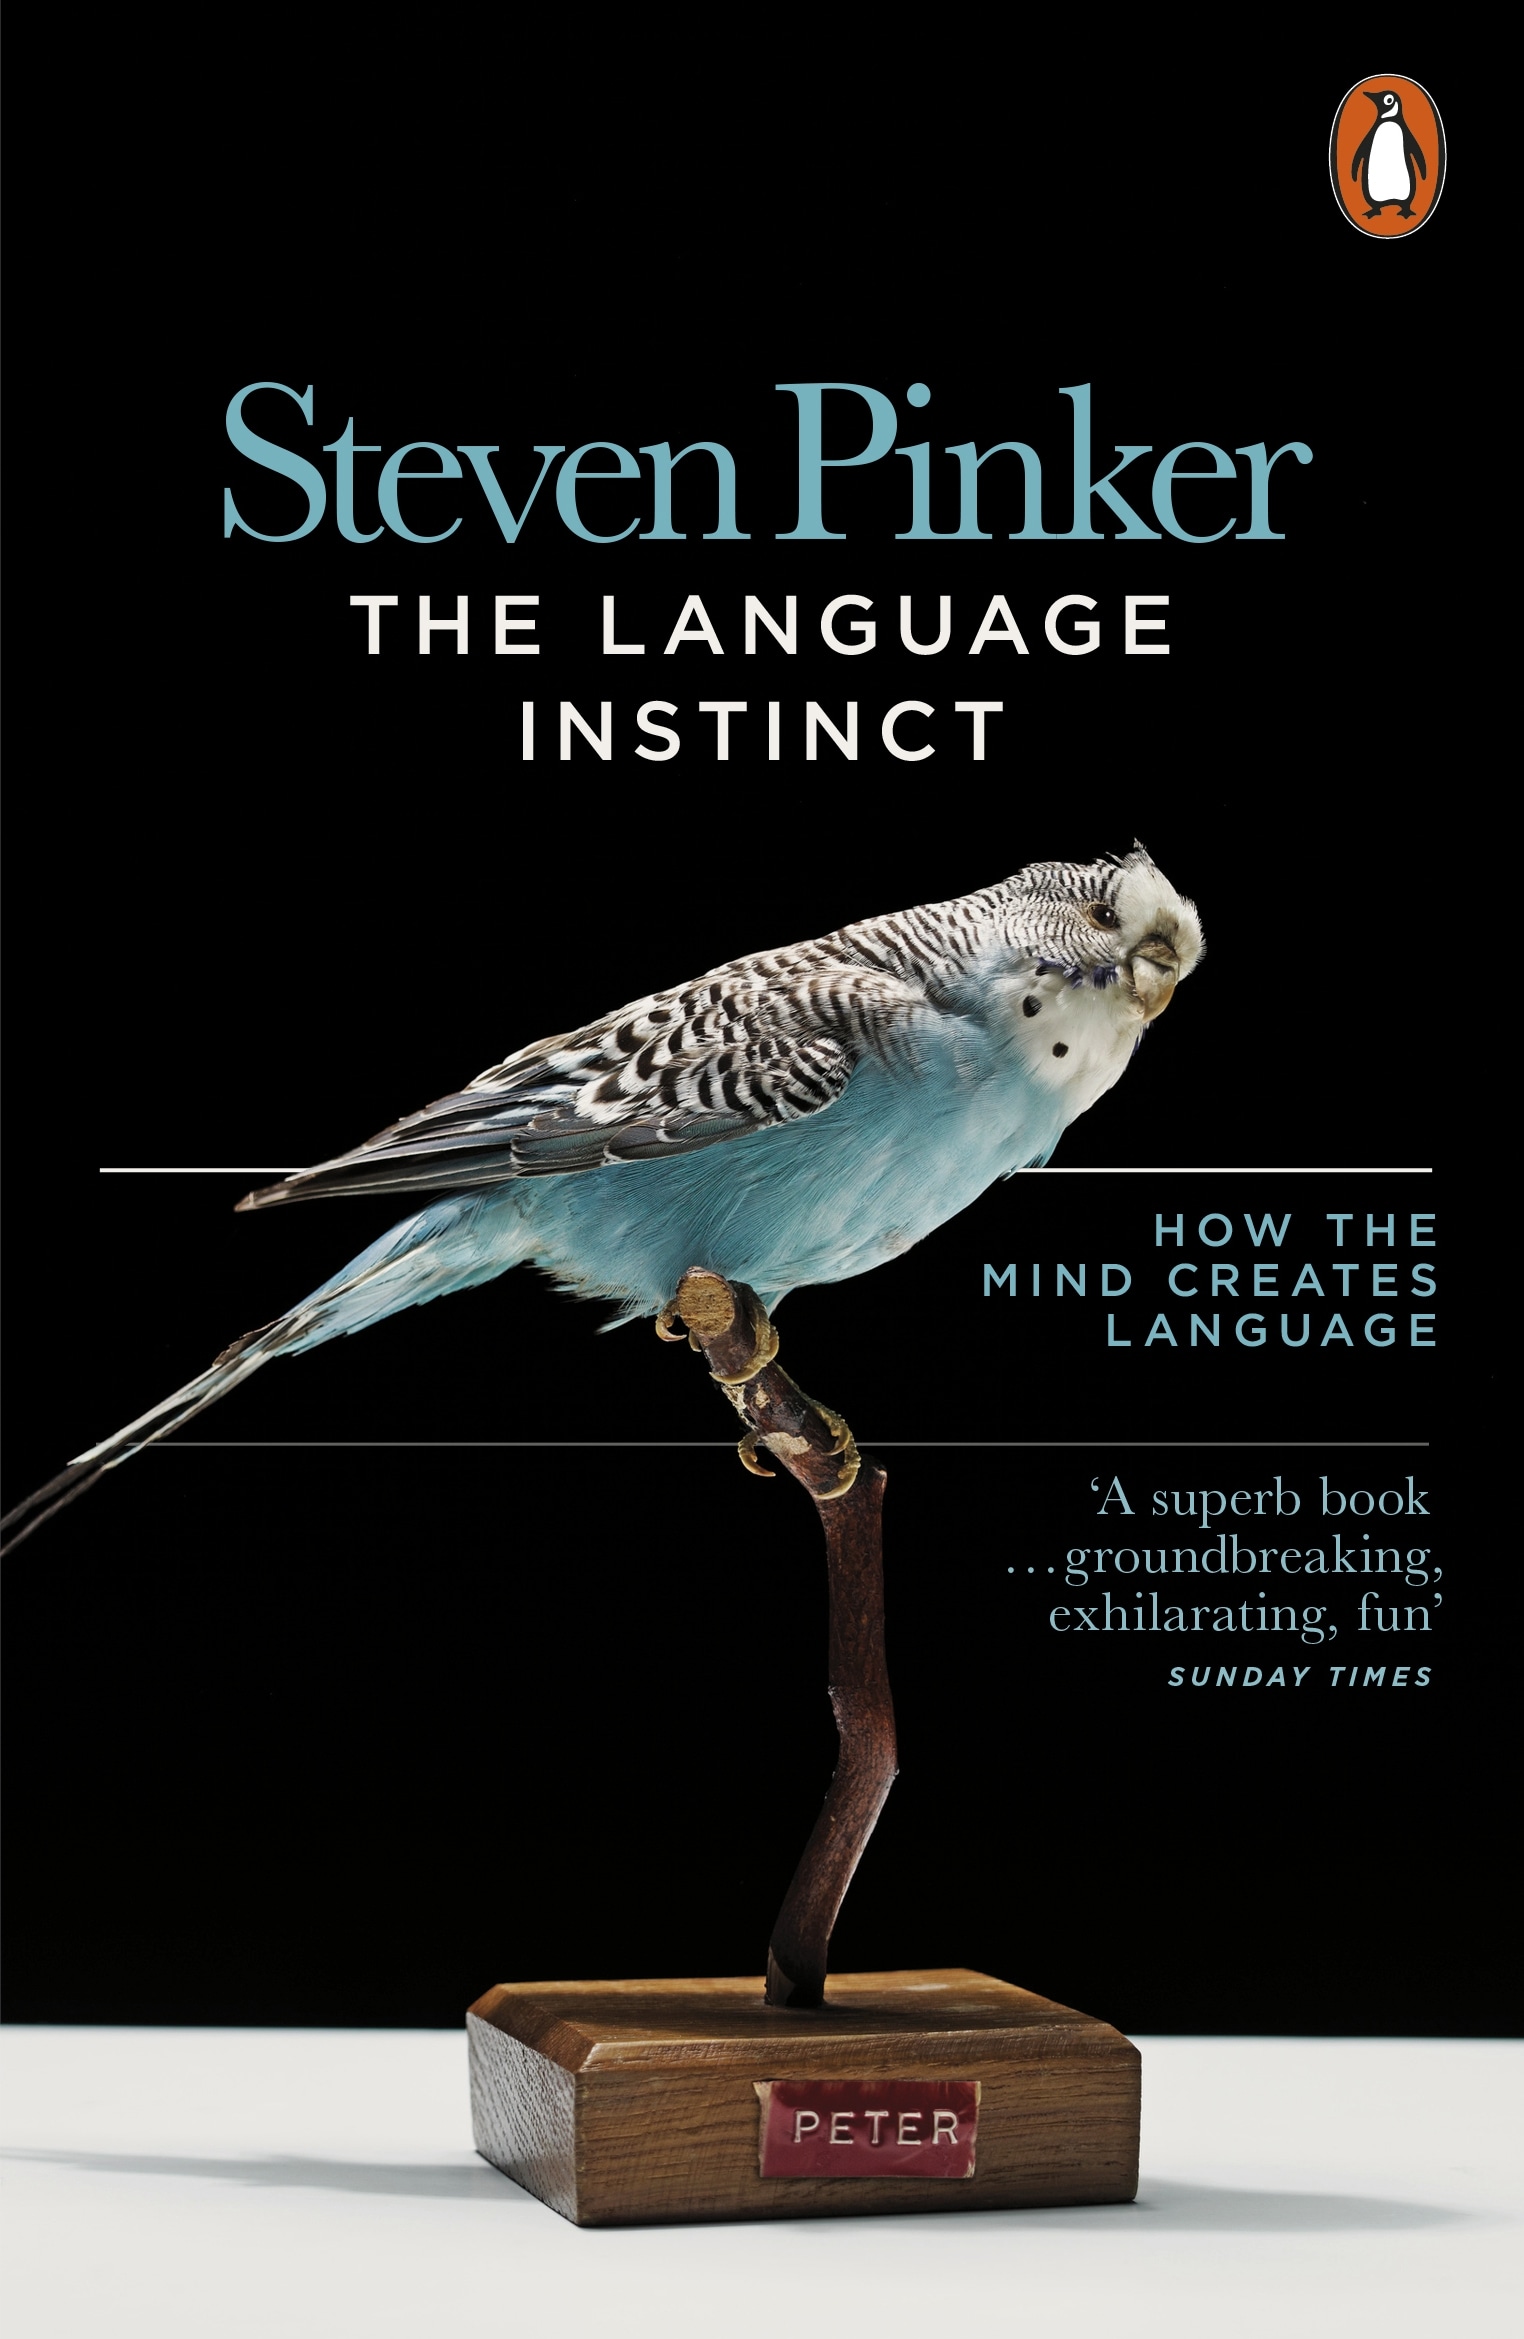 Book “The Language Instinct” by Steven Pinker